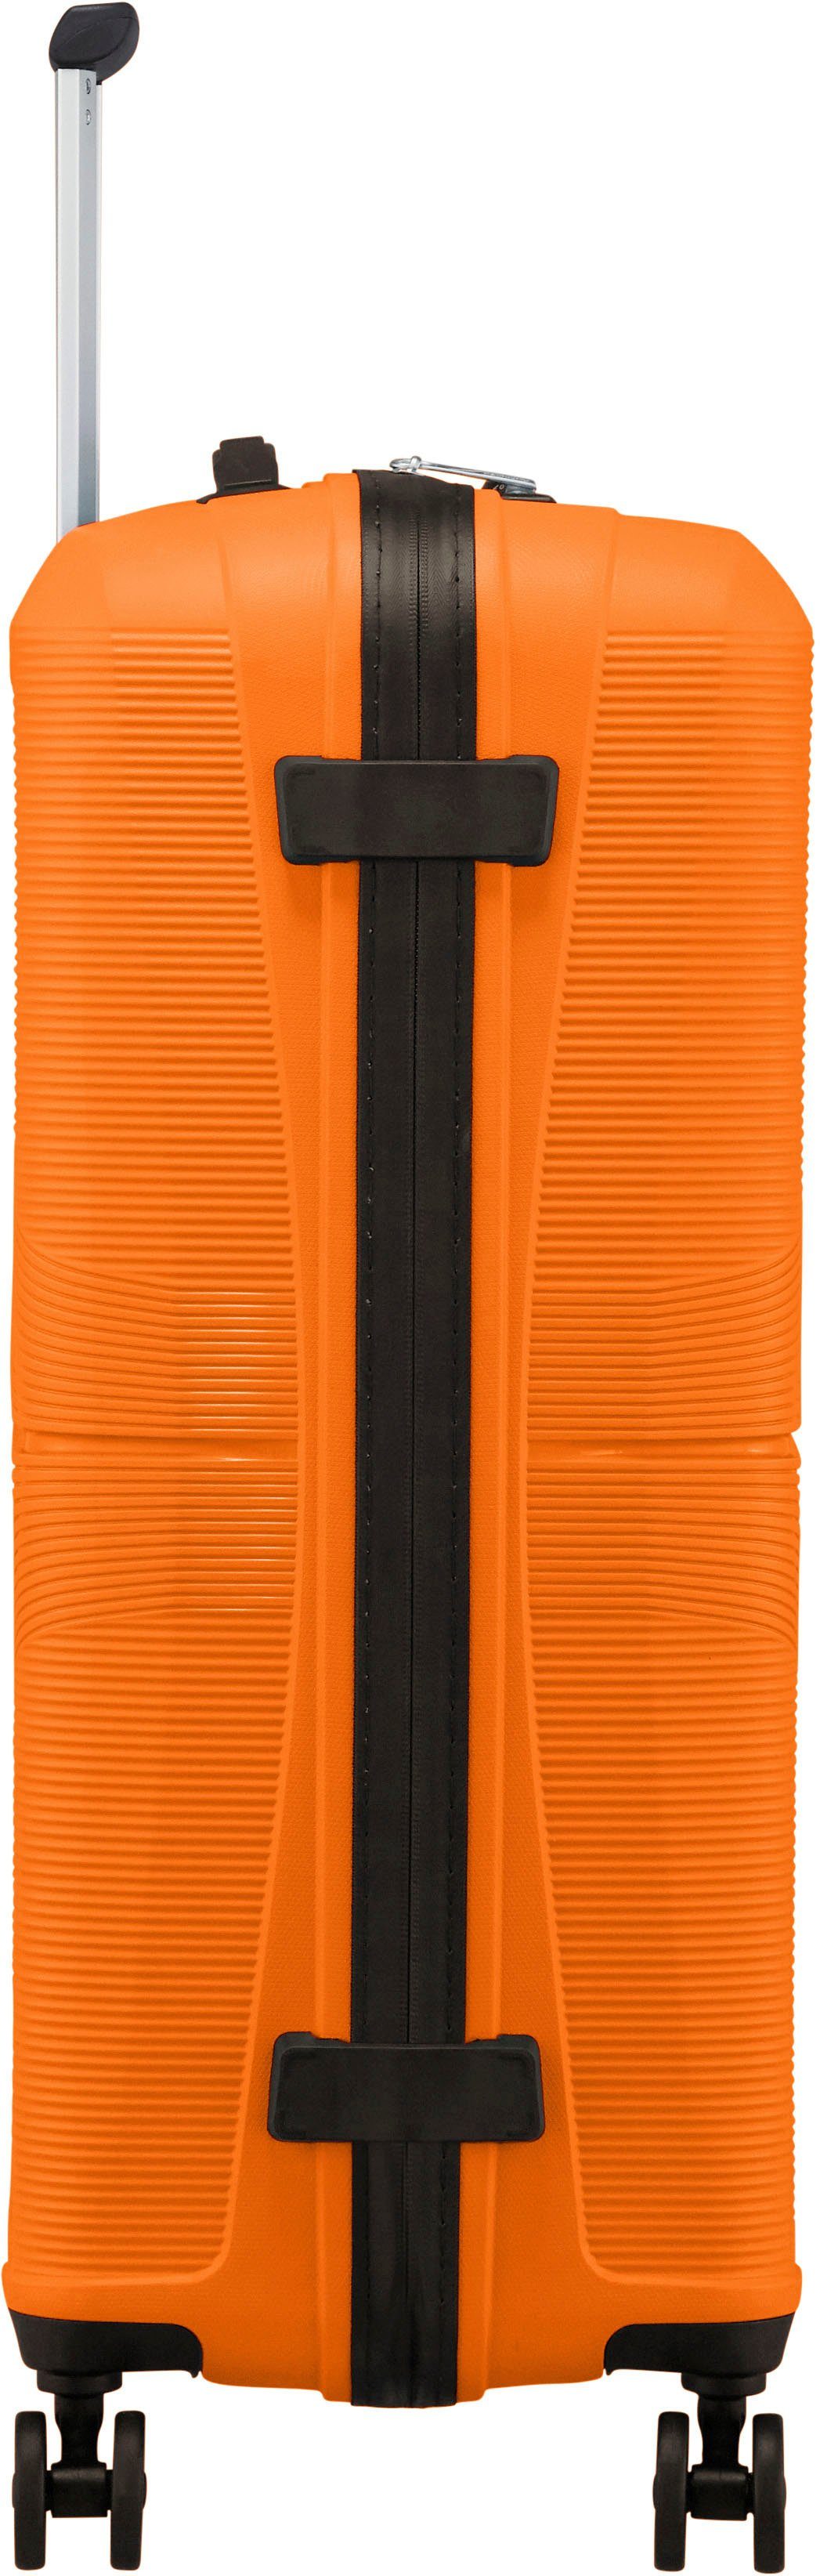 Hartschalen-Trolley American Tourister® Orange 67 Airconic, 4 cm, Mango Rollen